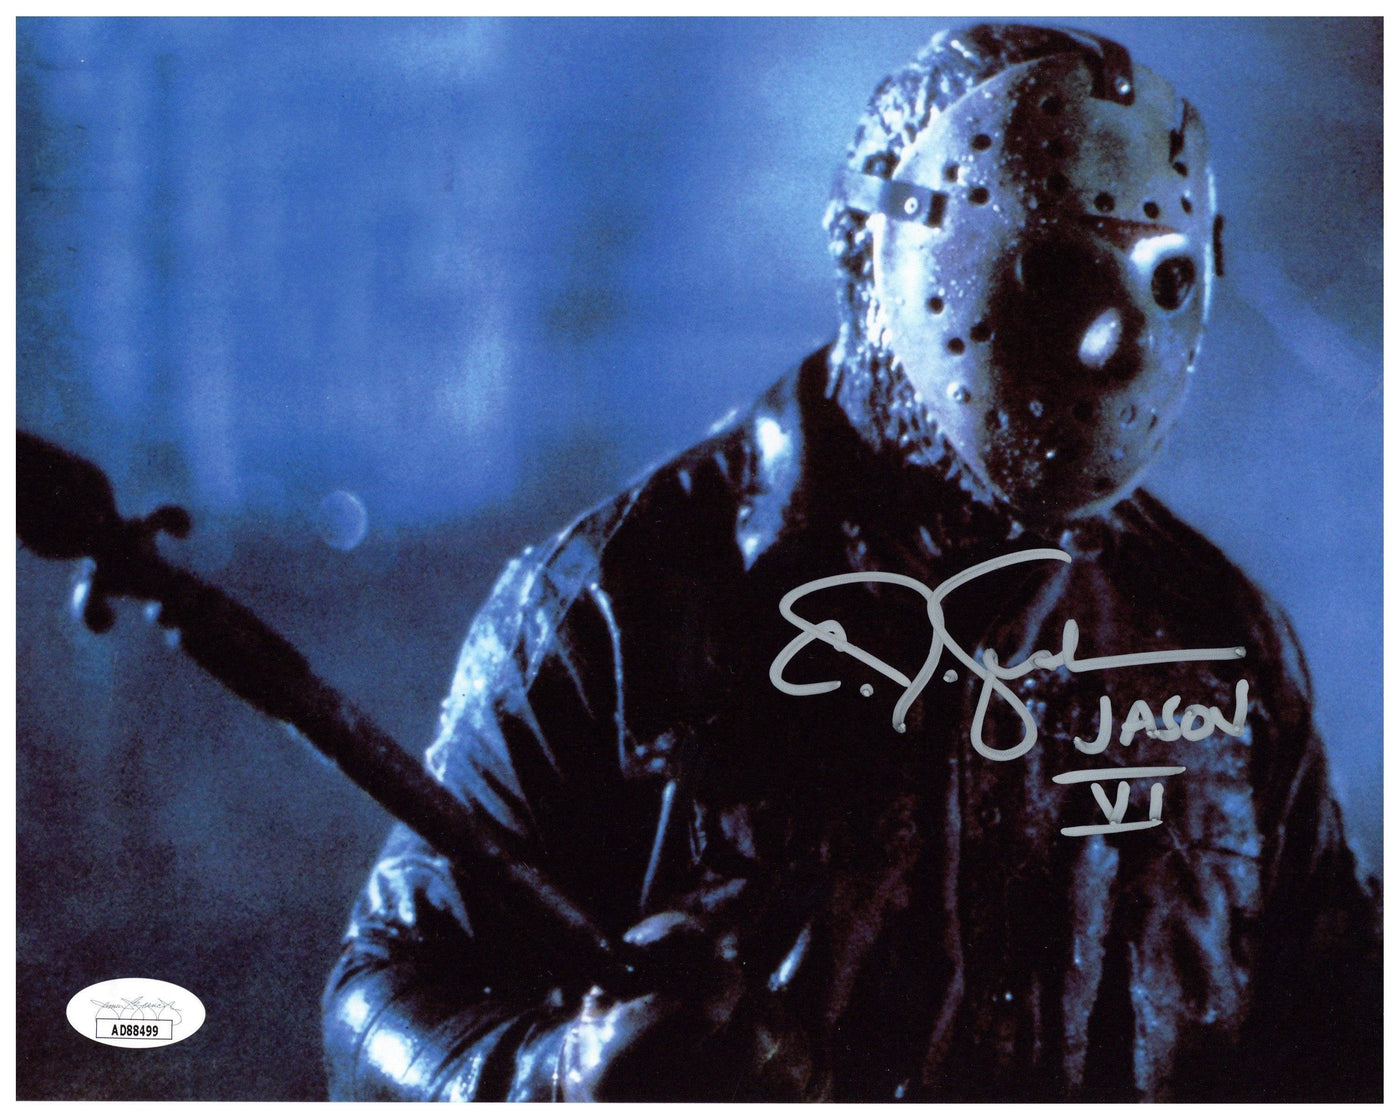 CJ Graham Signed 8x10 Photo Friday the 13th Jason Autographed JSA COA #3